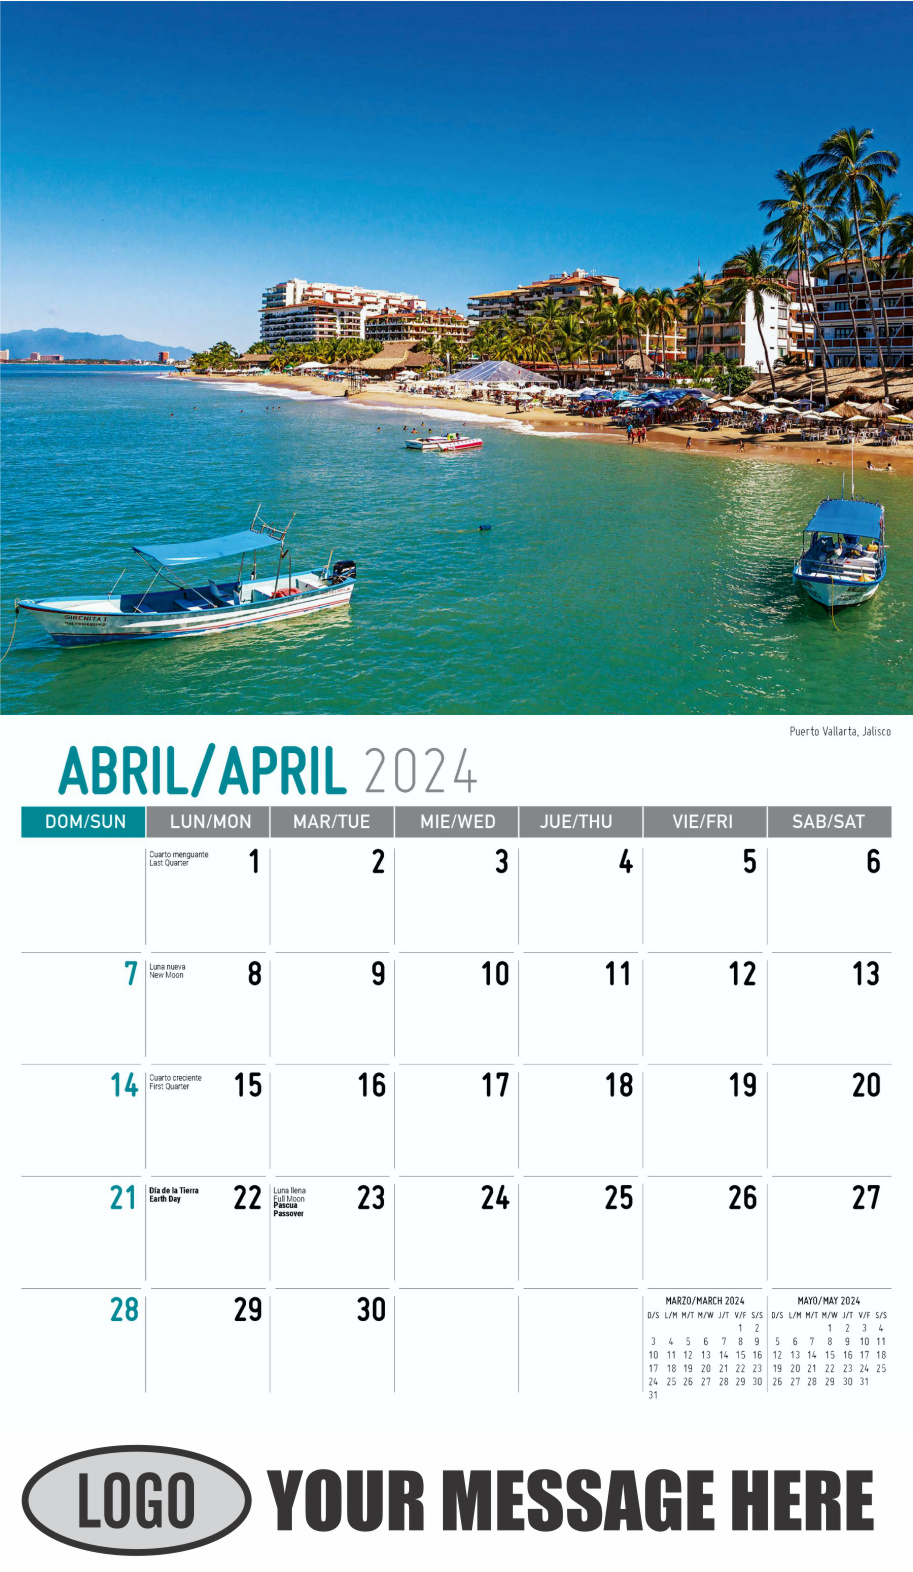 Scenes of Mexico 2024 Bilingual Business Promo Calendar - April